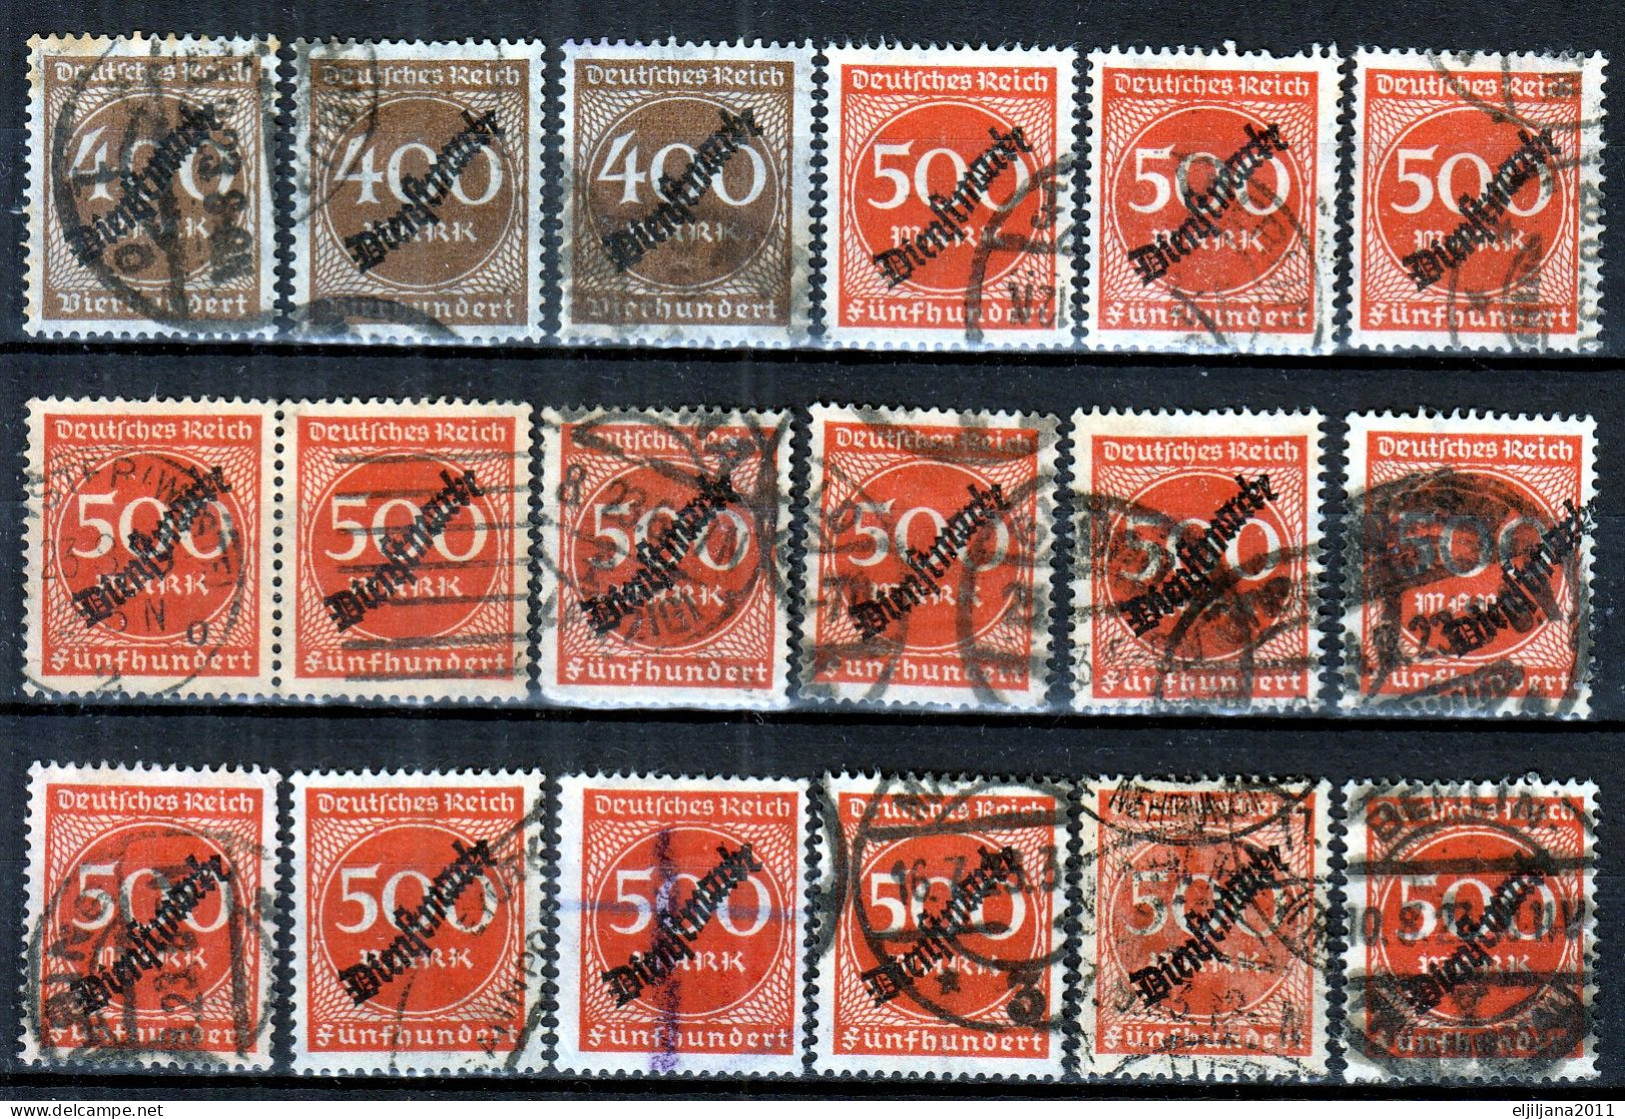 ⁕ Germany, Deutsches Reich 1923 Infla ⁕ Dienstmarke /official Stamps, Overprint ⁕ 54v ( Used & Unused, No Gum) - Dienstzegels